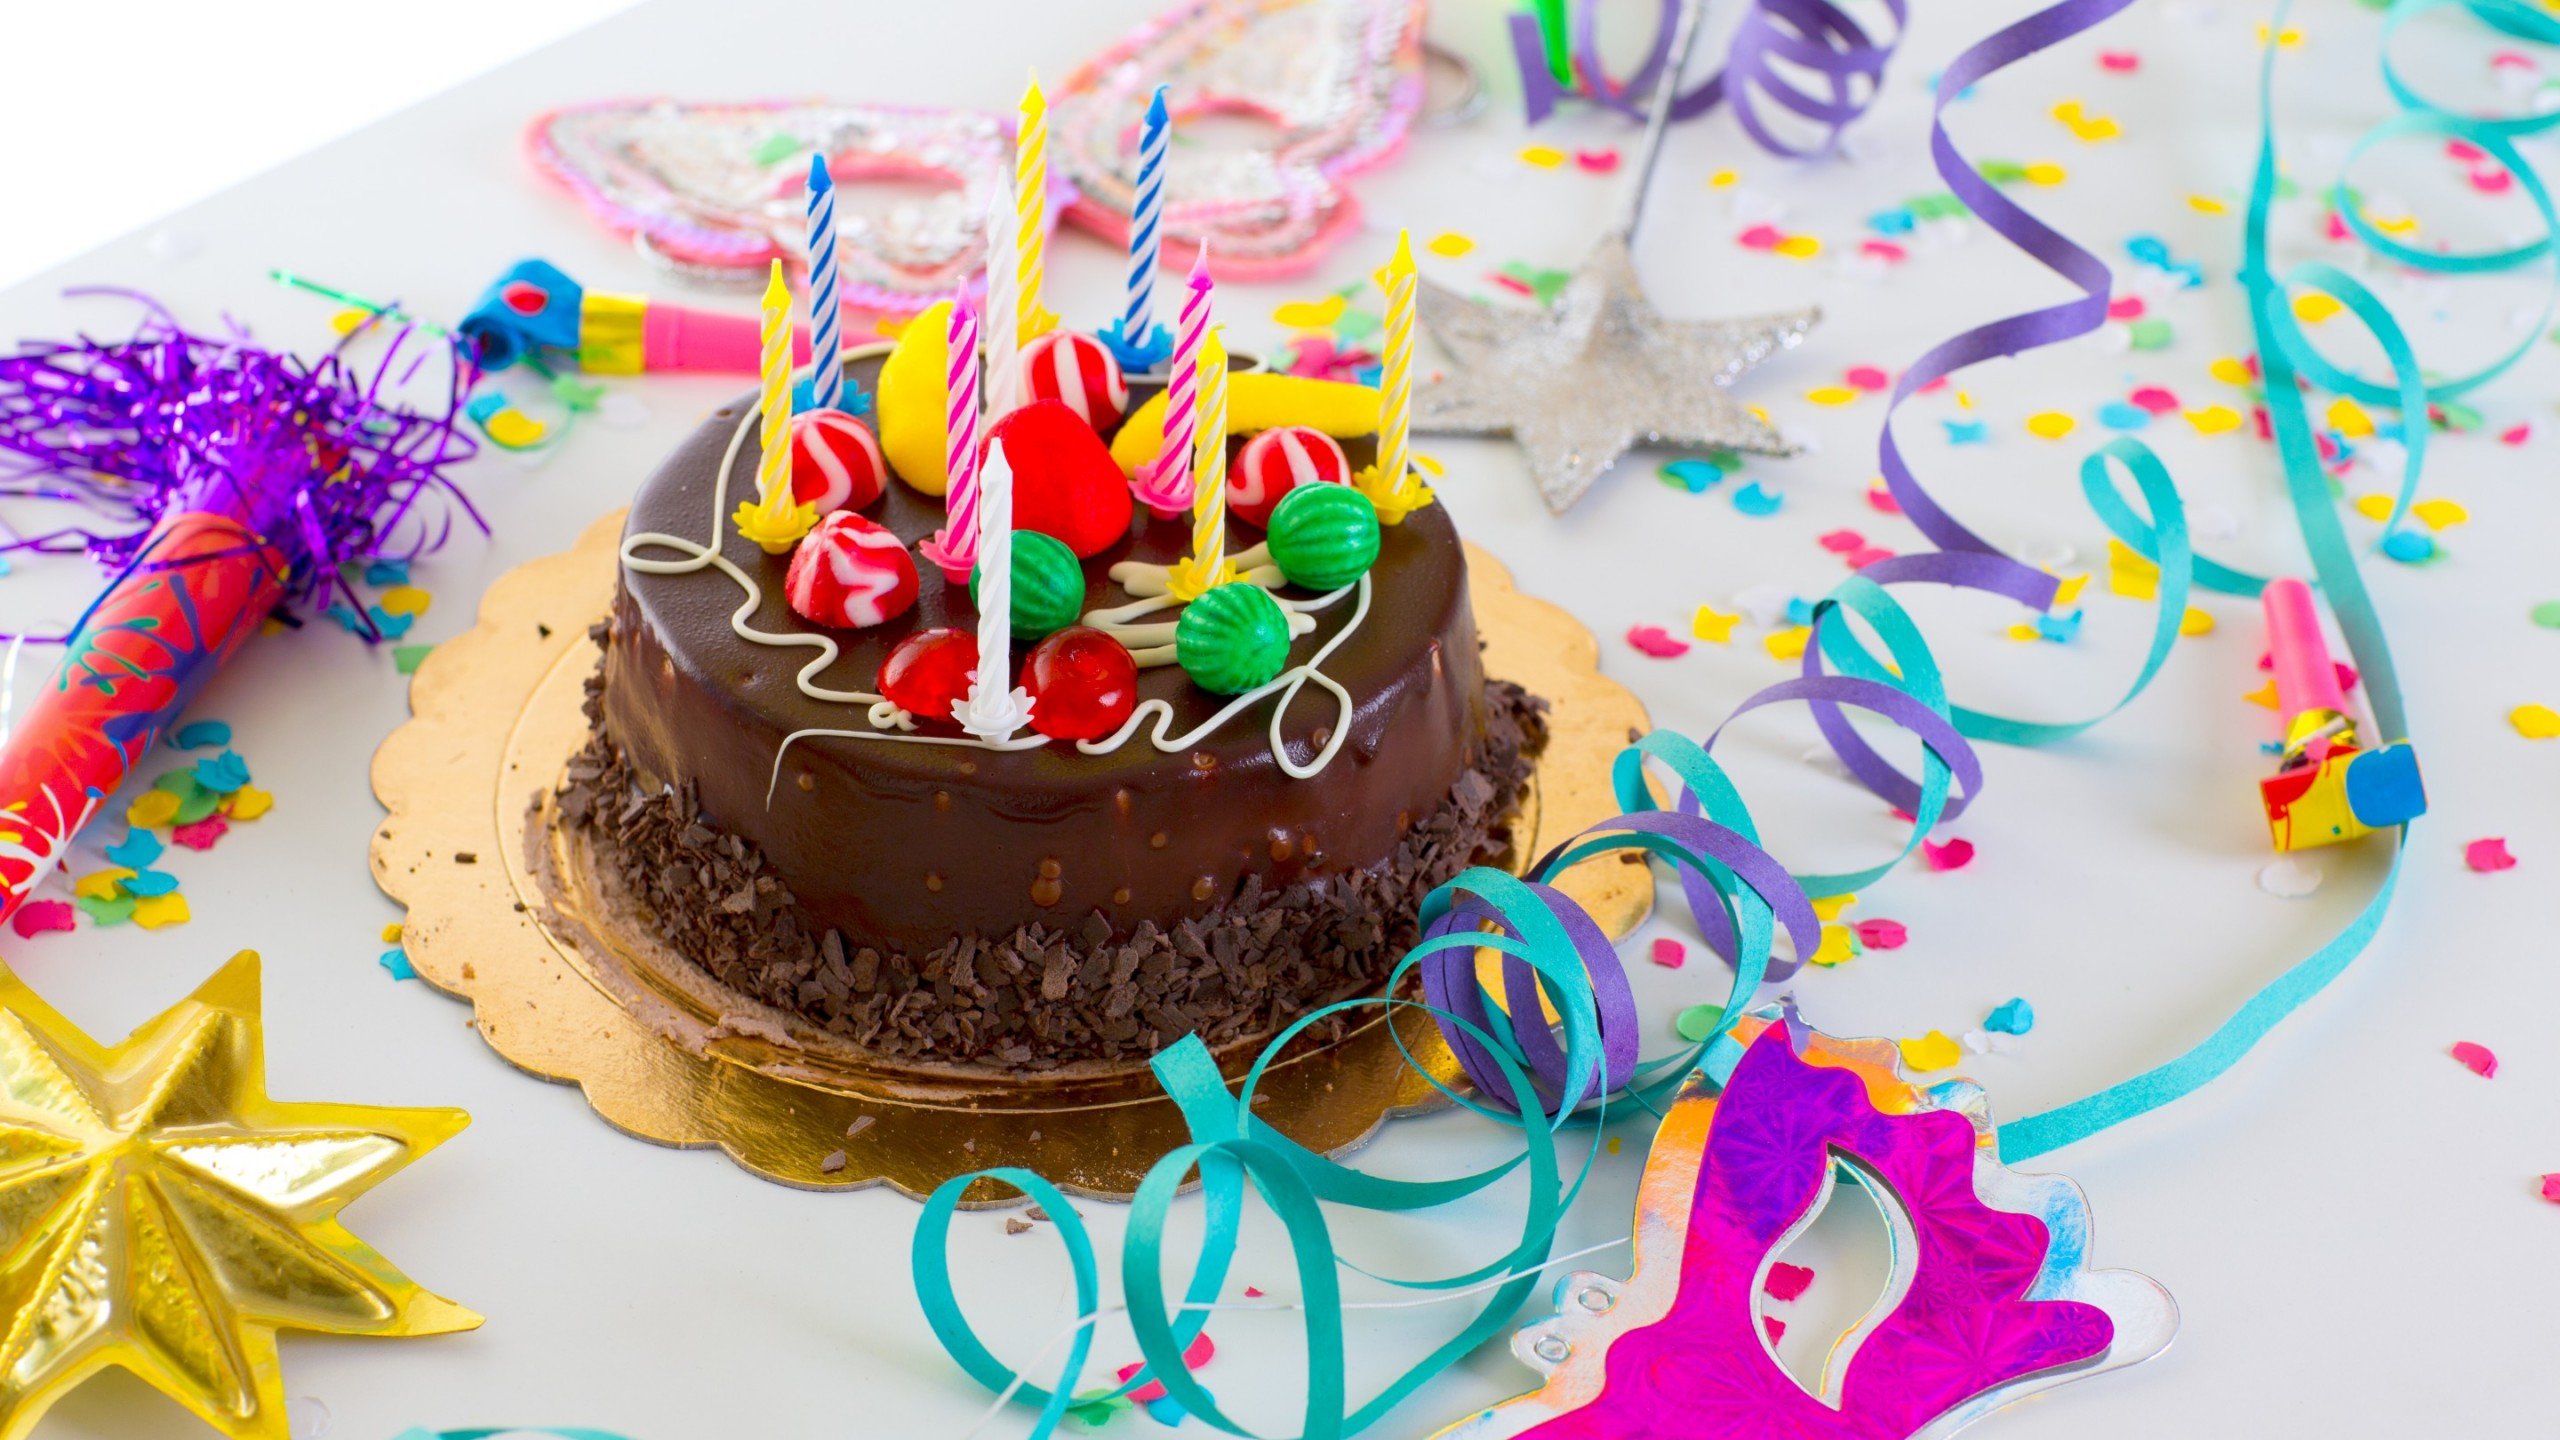 Birthday Cake Images download free - BirthDay Cake Images HD DownloaD Free 5